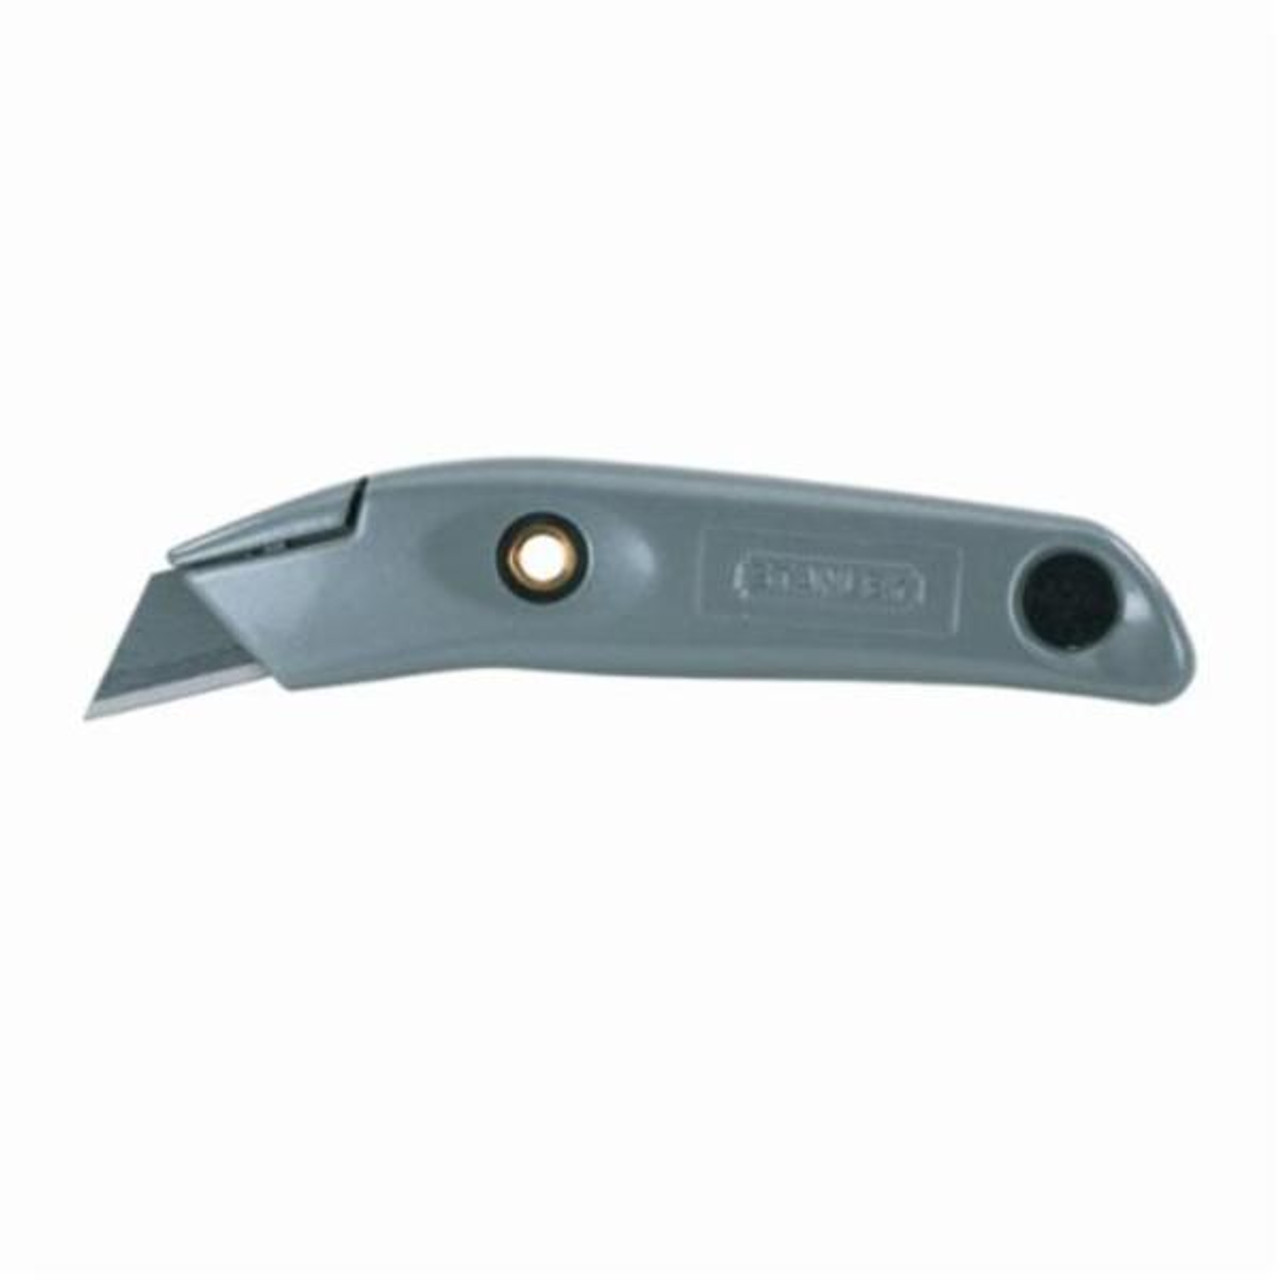 KNIFE CARPET FIXED BLADE 5-3/4 (STA-10-525) - Ballard Industrial